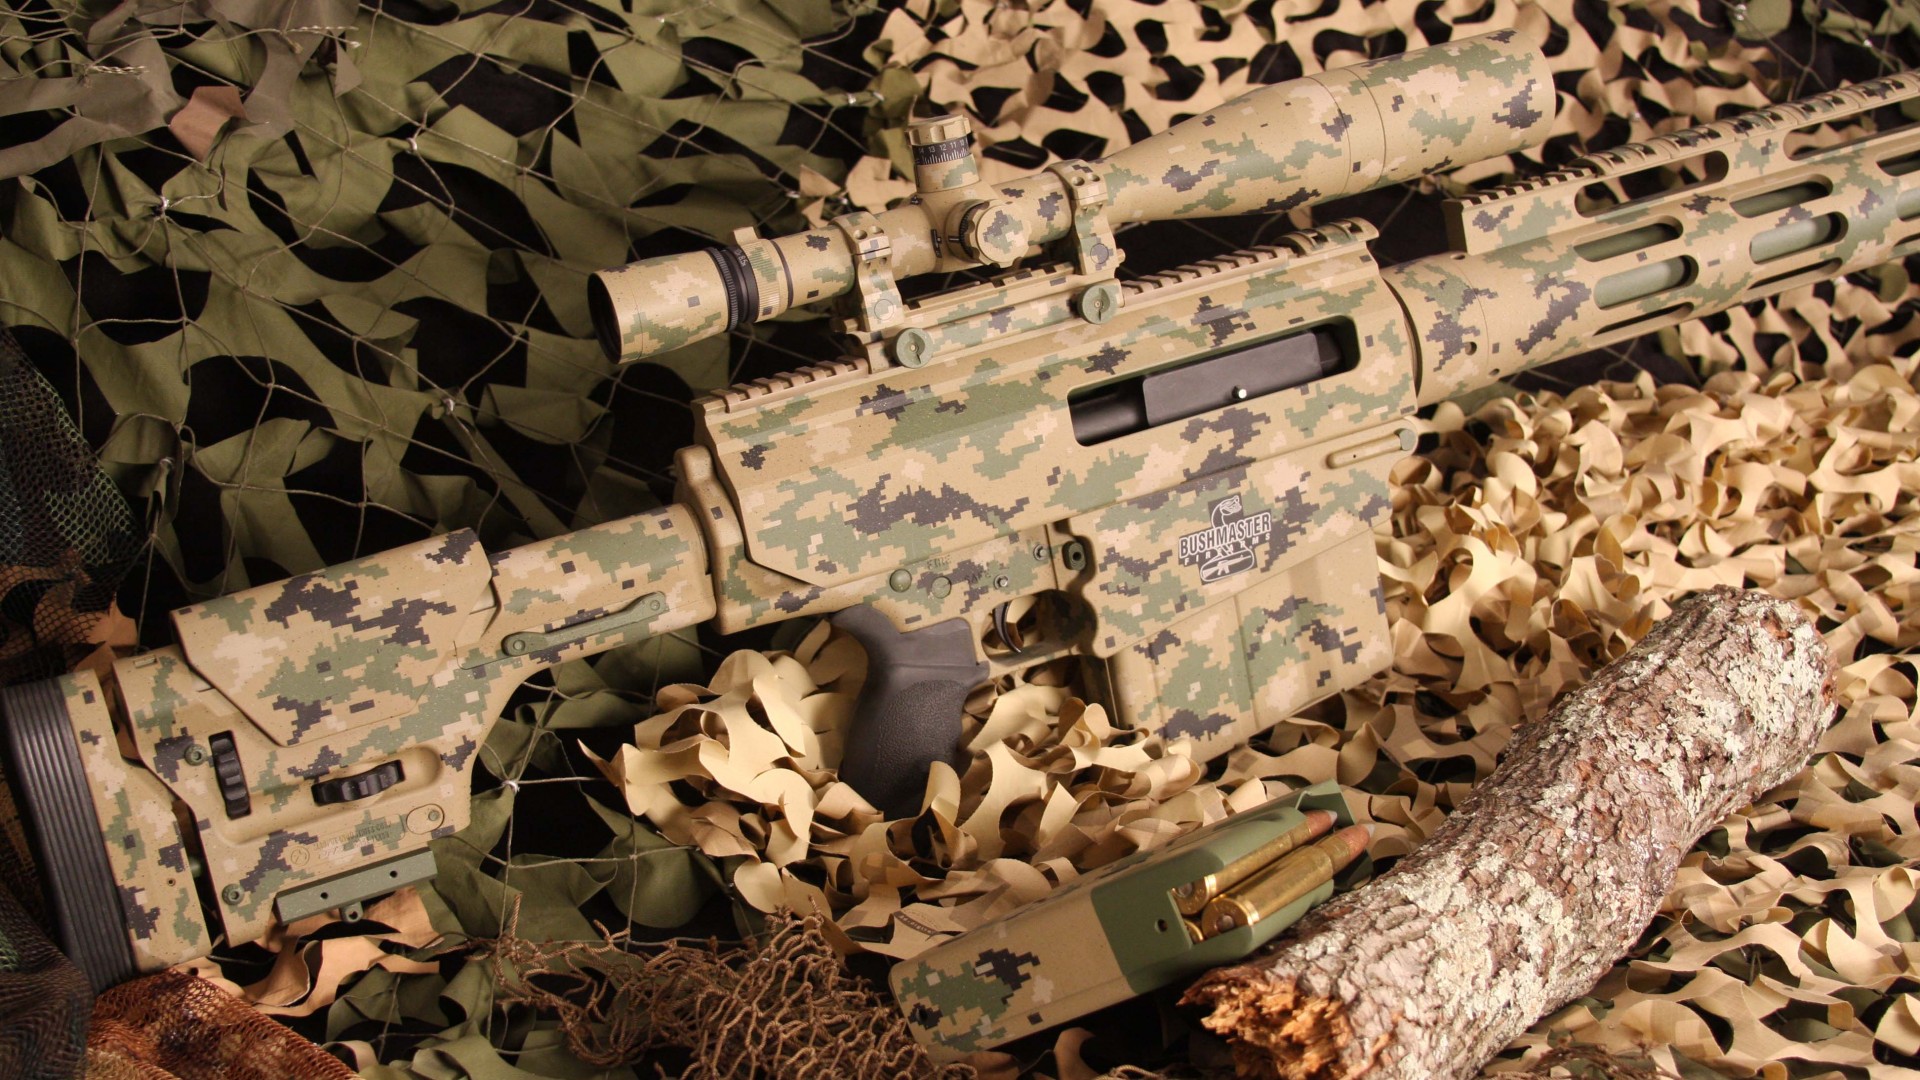 Bushmaster BA50 Wallpaper Military Weapons Bushmaster BA50 sniper